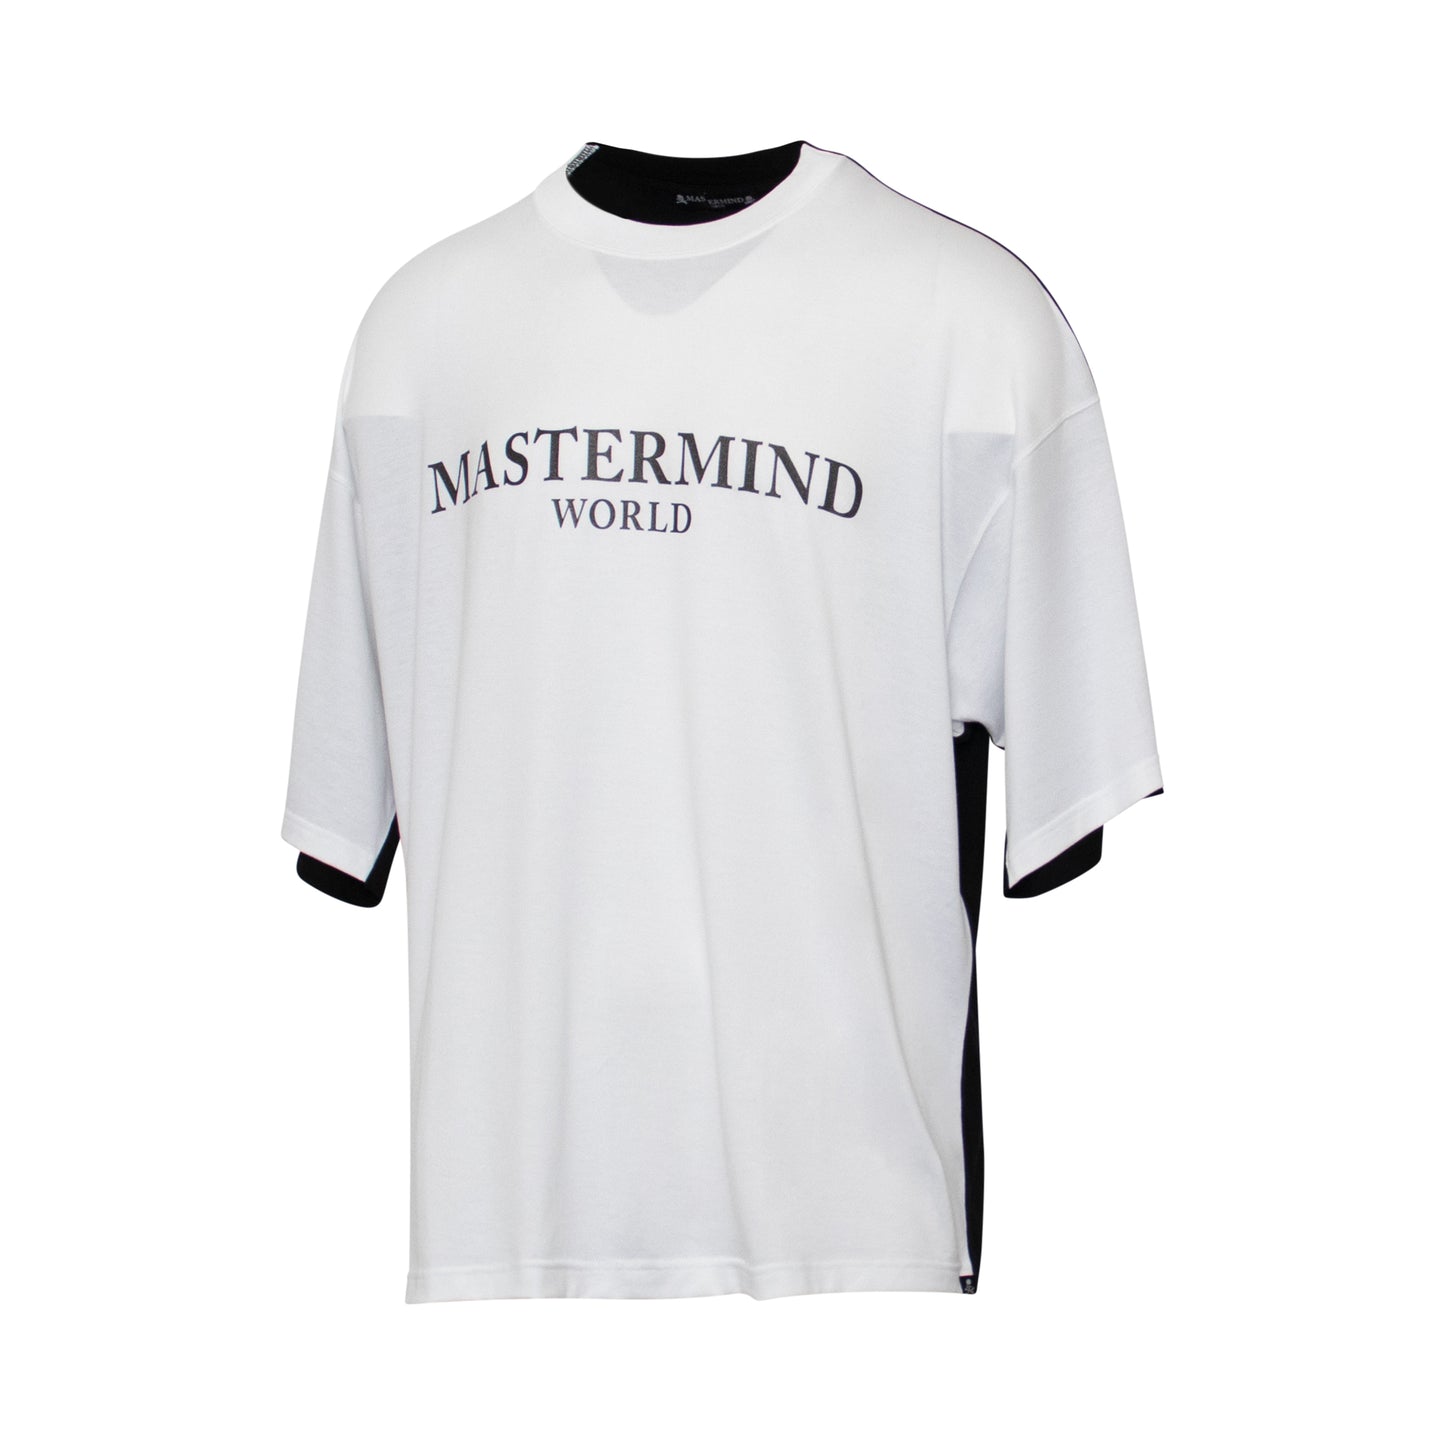 Mastermind World T-Shirts in White/Black